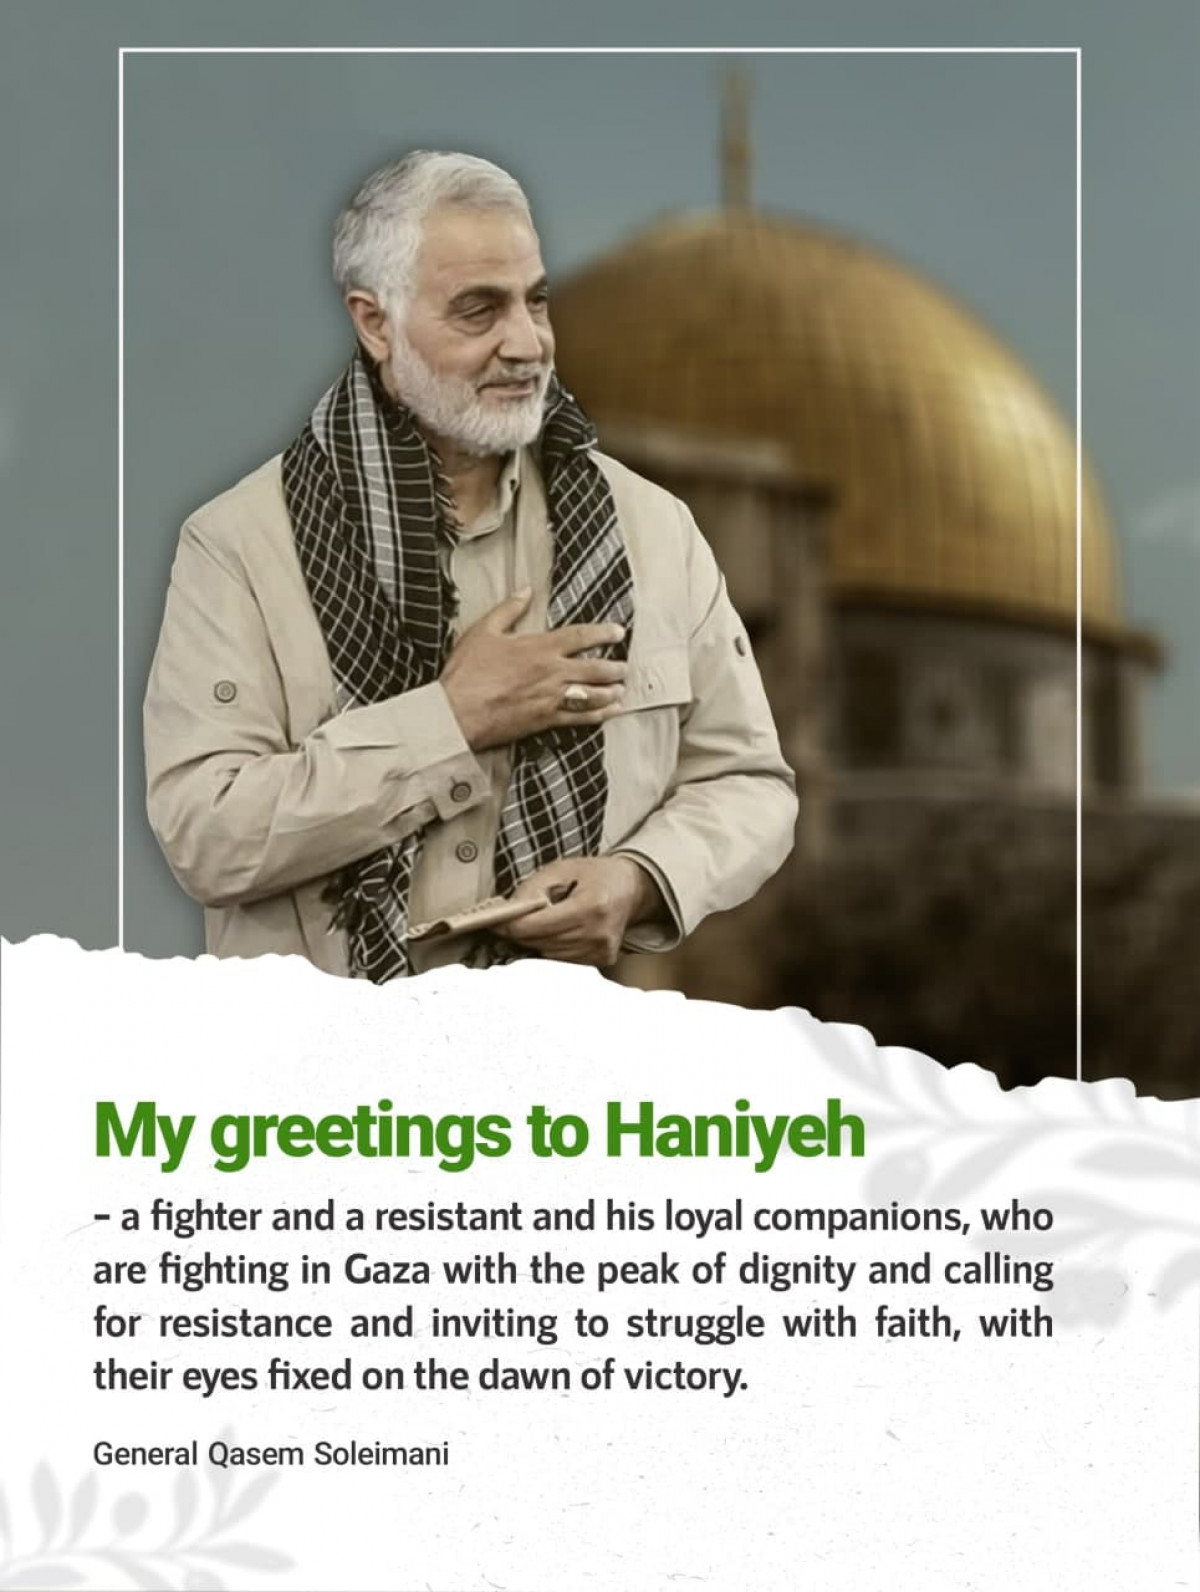 General Qasem Soleimani: My greetings to Haniyeh